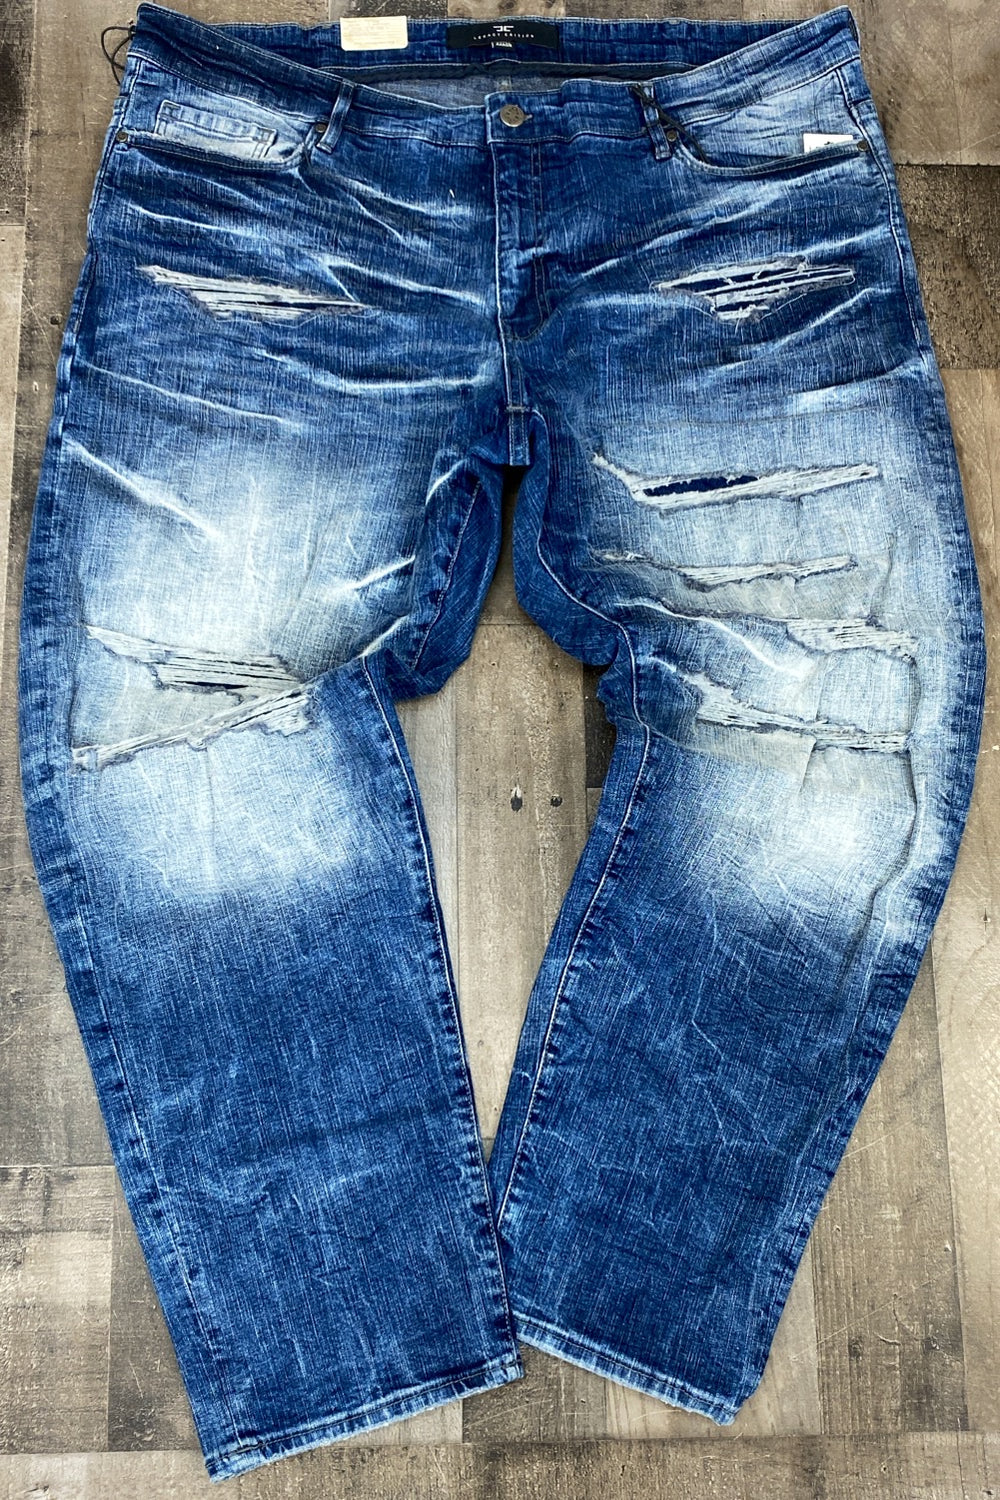 Jordan Craig- Aged wash jeans (big and tall)